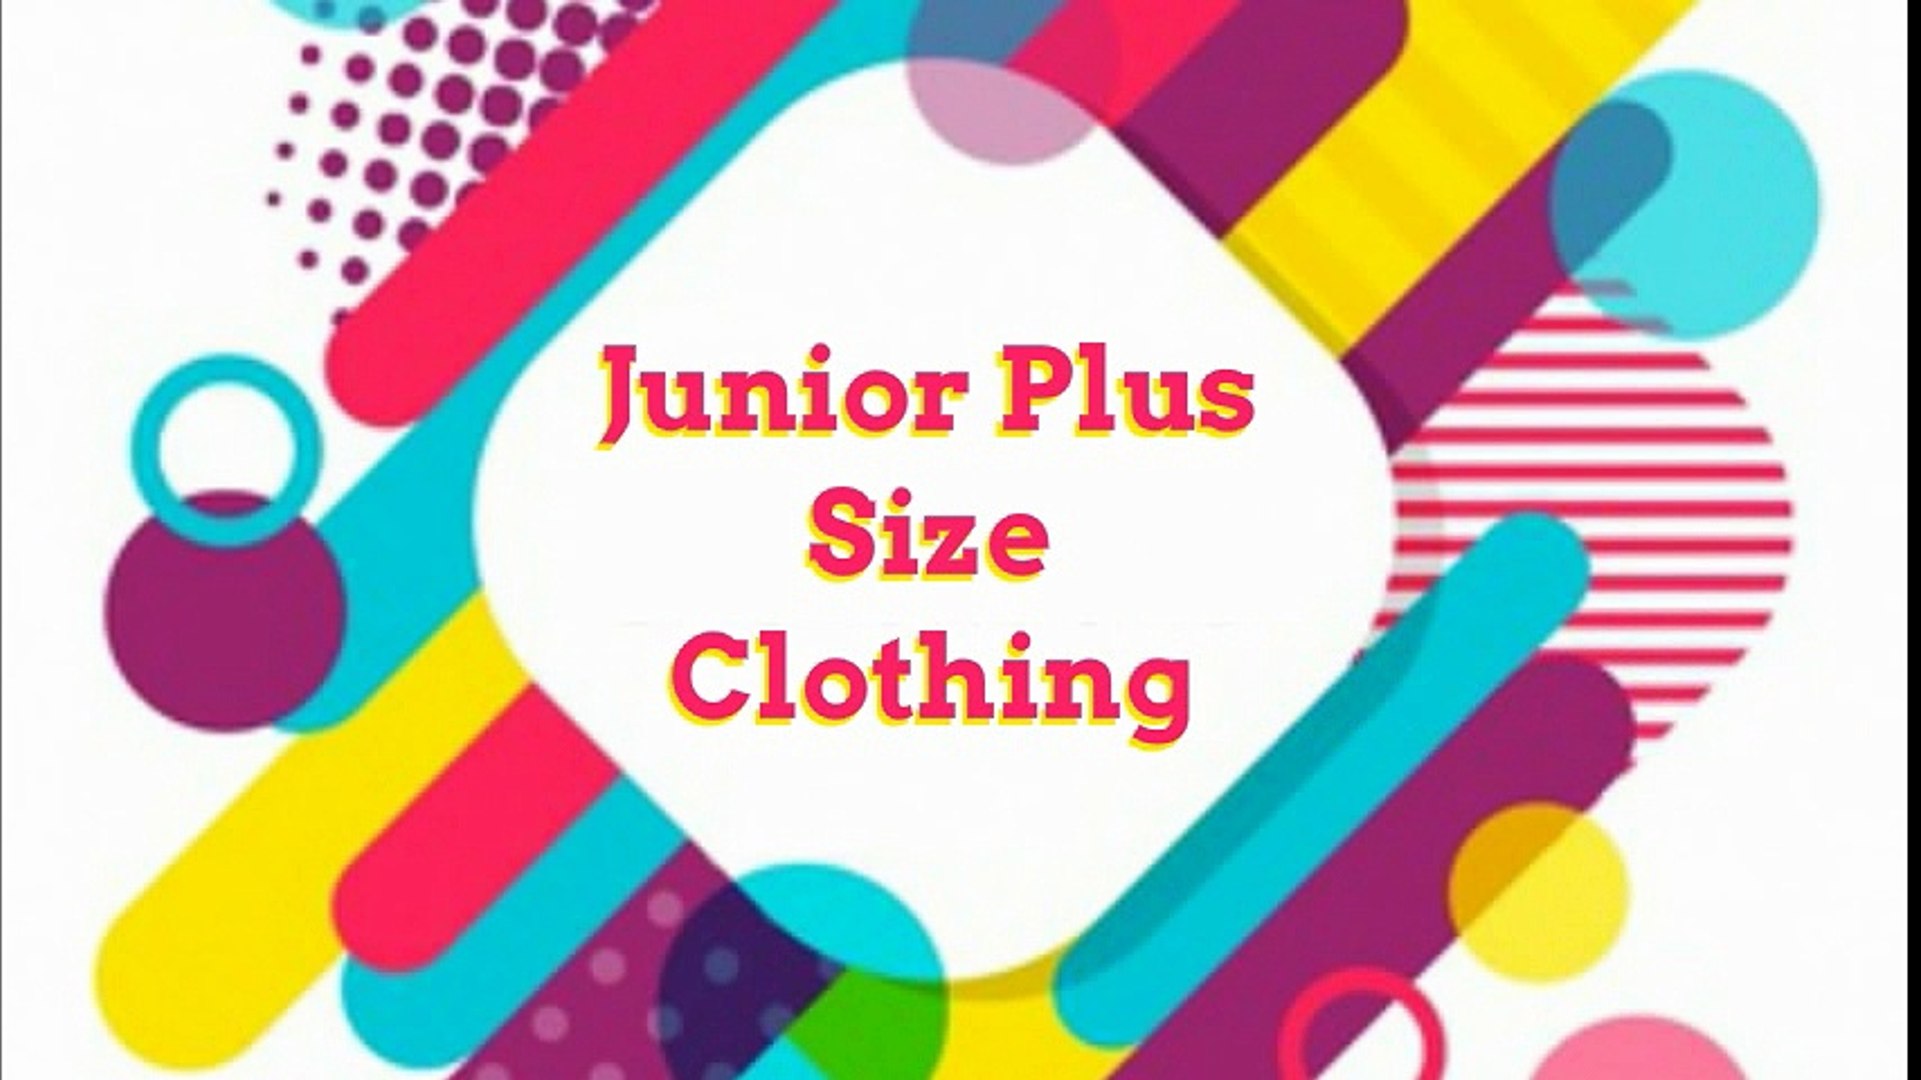 Junior Plus size clothing by 599 Fashion